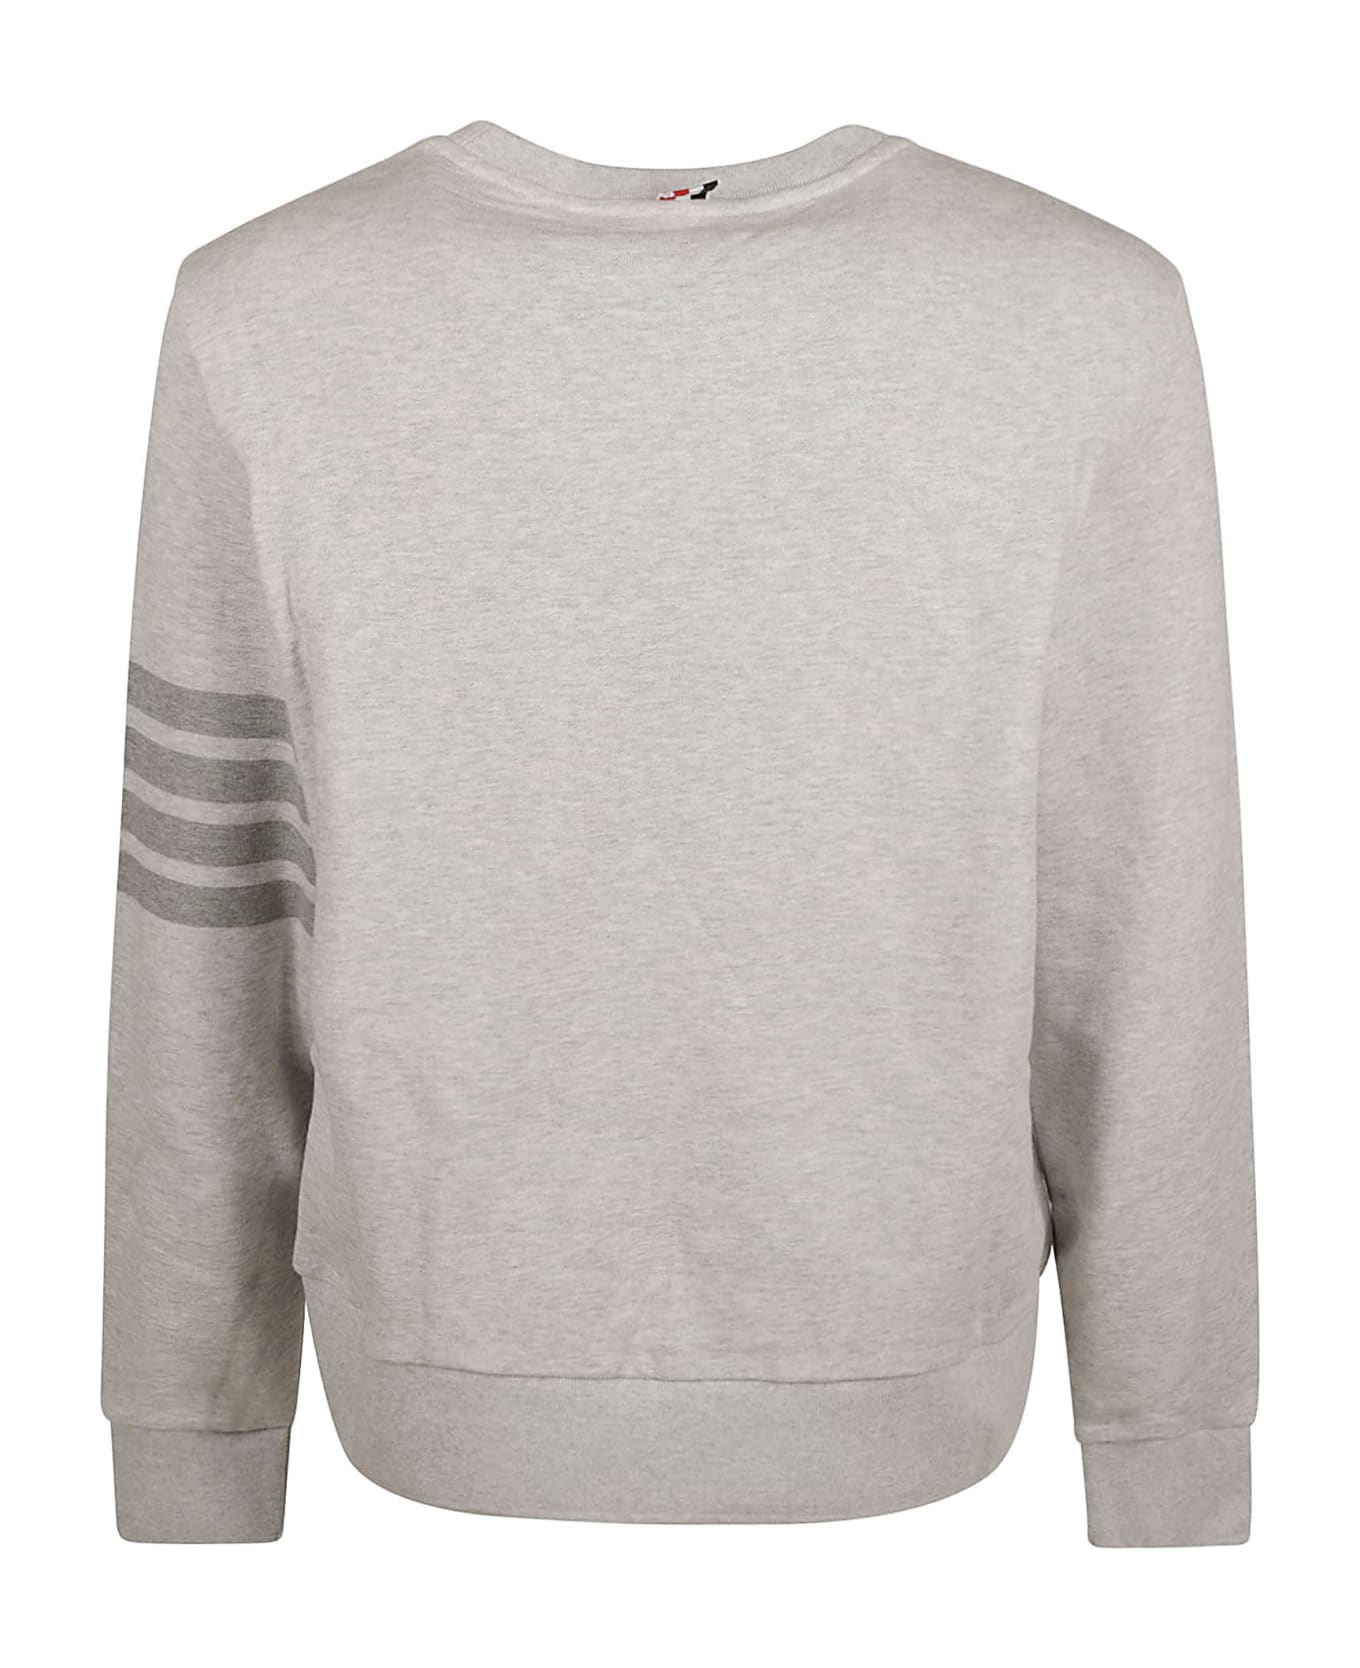 Thom Browne 4bar T-shirt - Light Grey